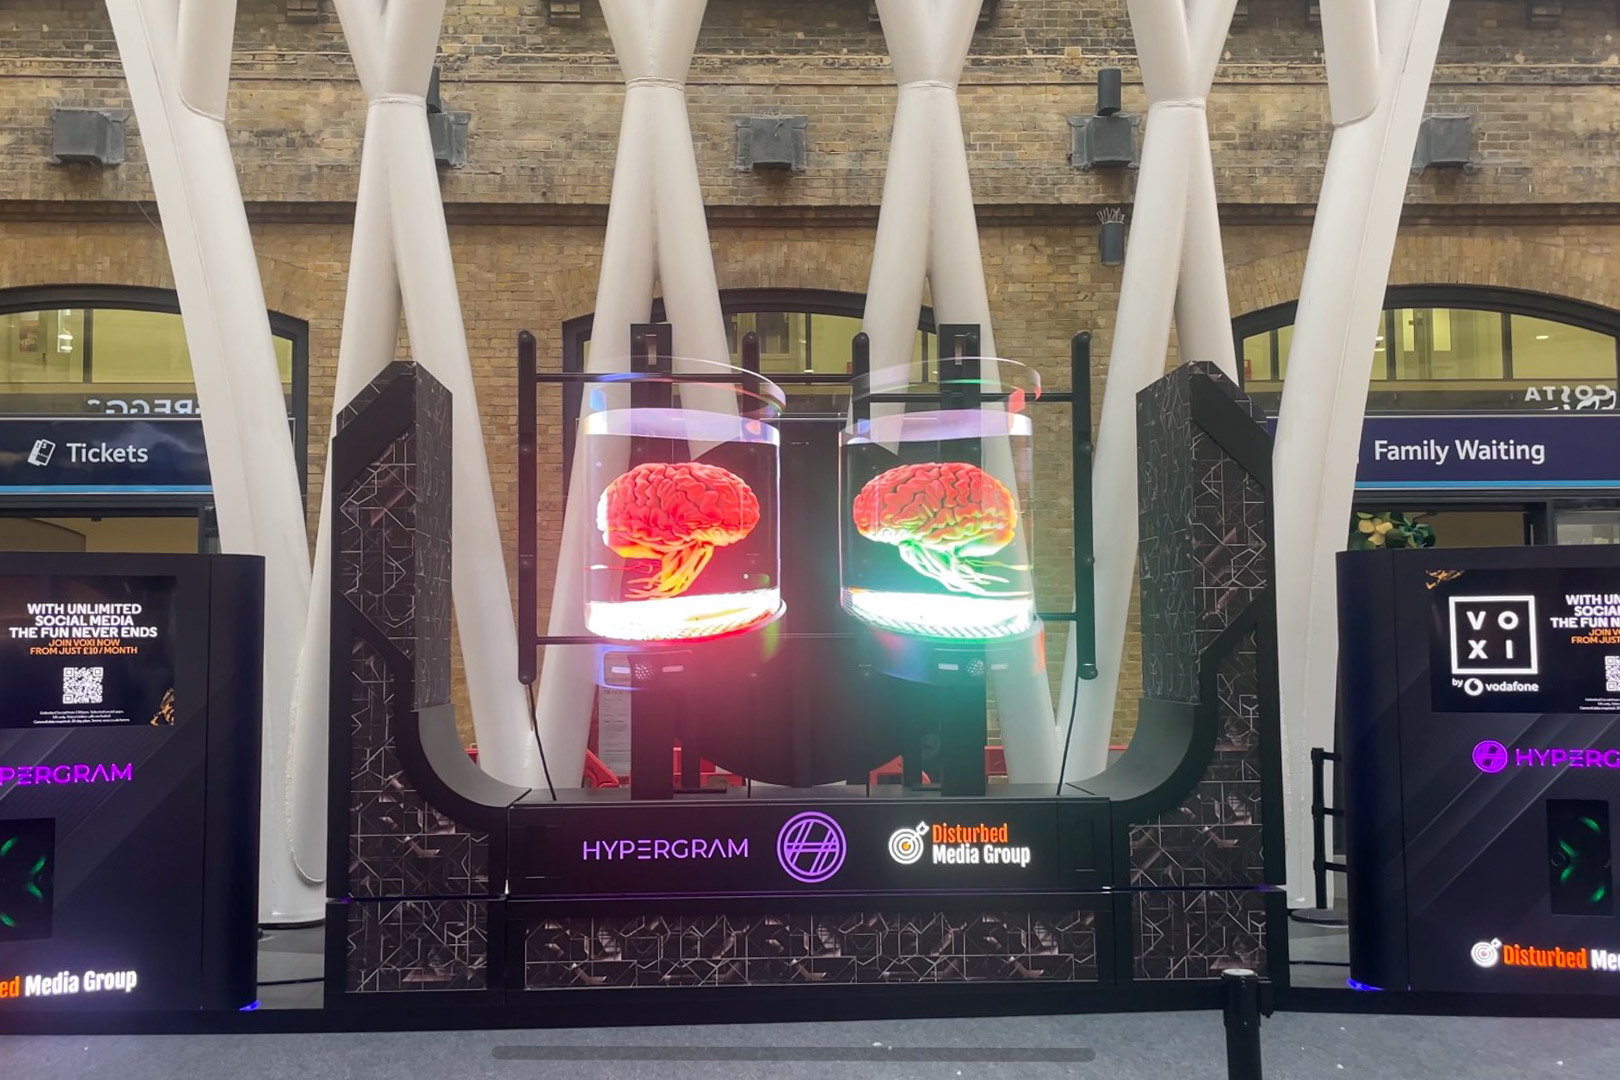 Image showing VOXI's 3D hologram at London King's Cross station.